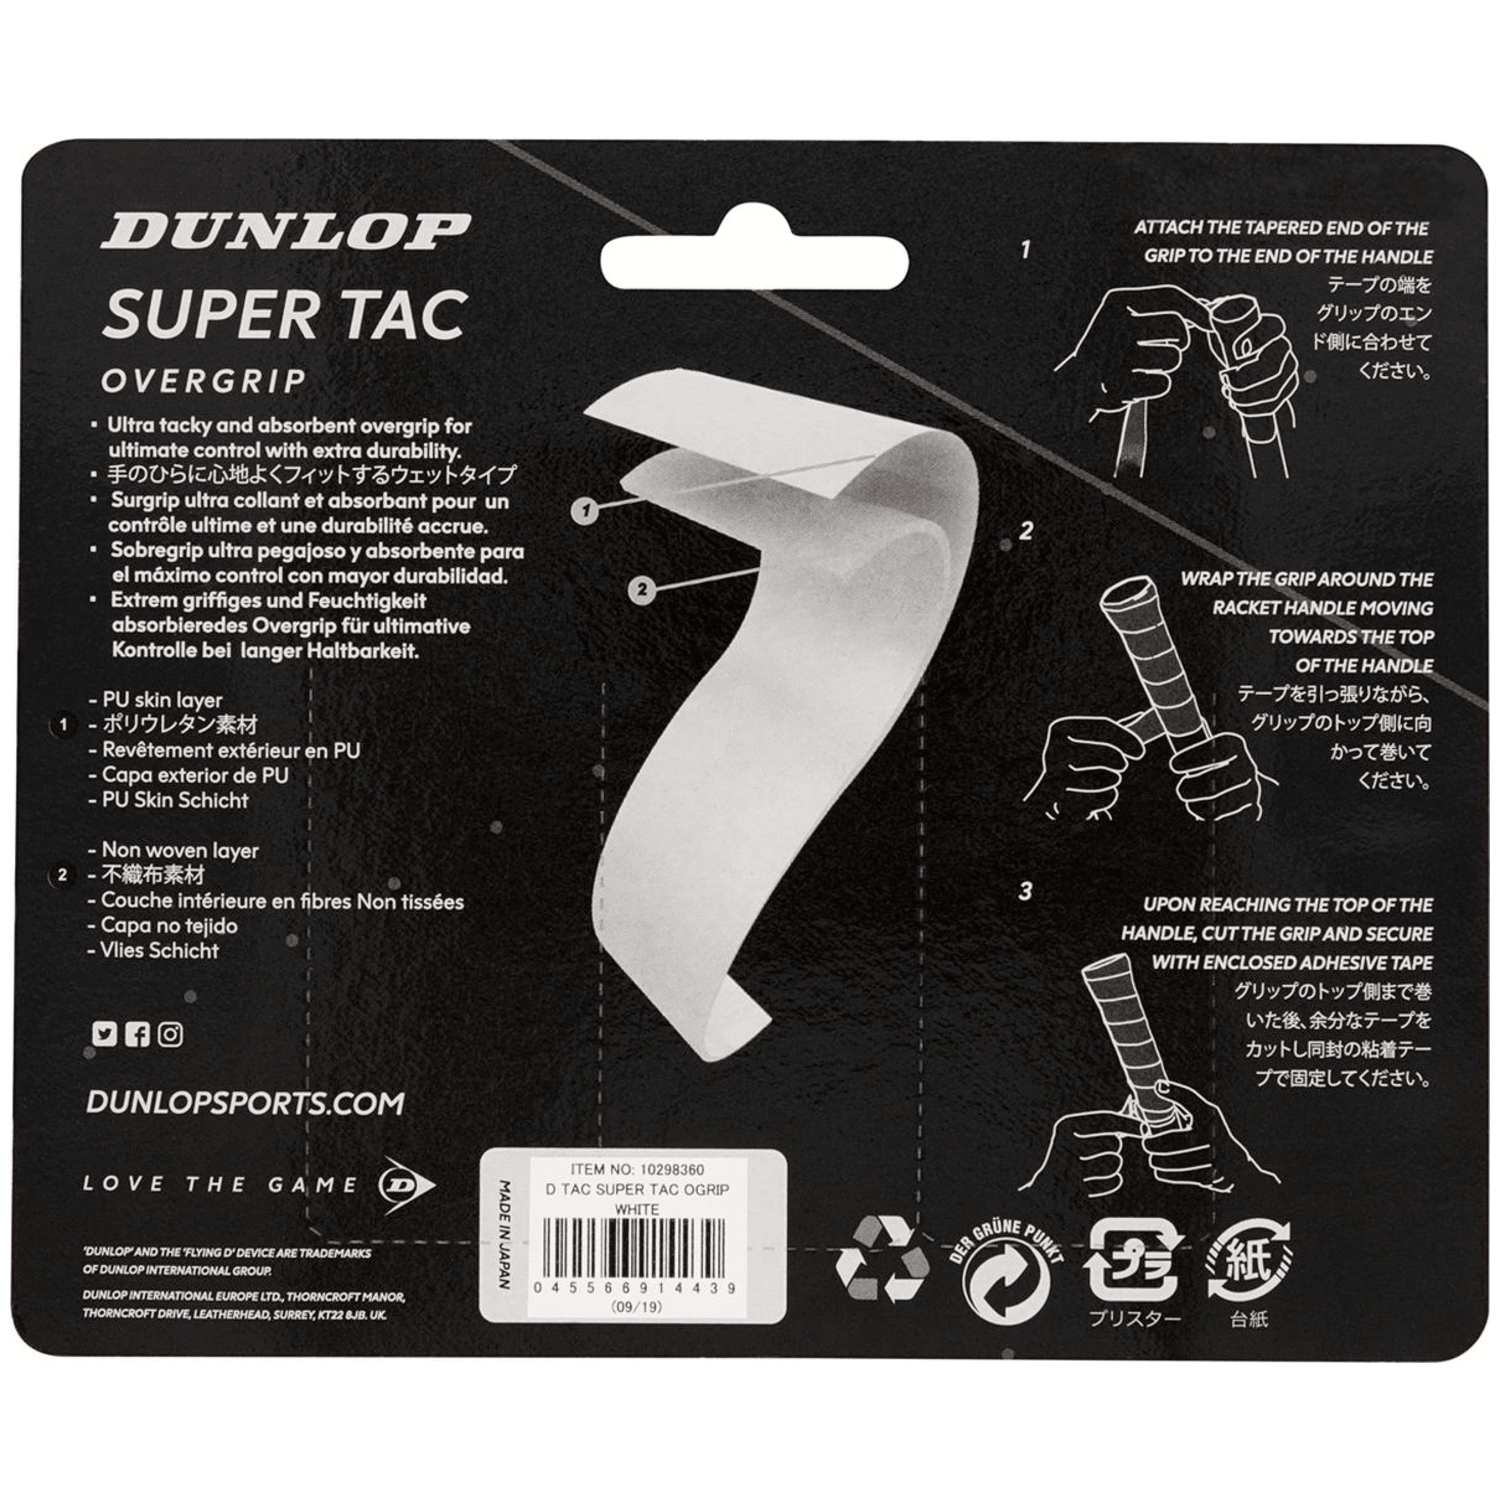 Dunlop D Tac Super Tac Overgrip 3er Griffband